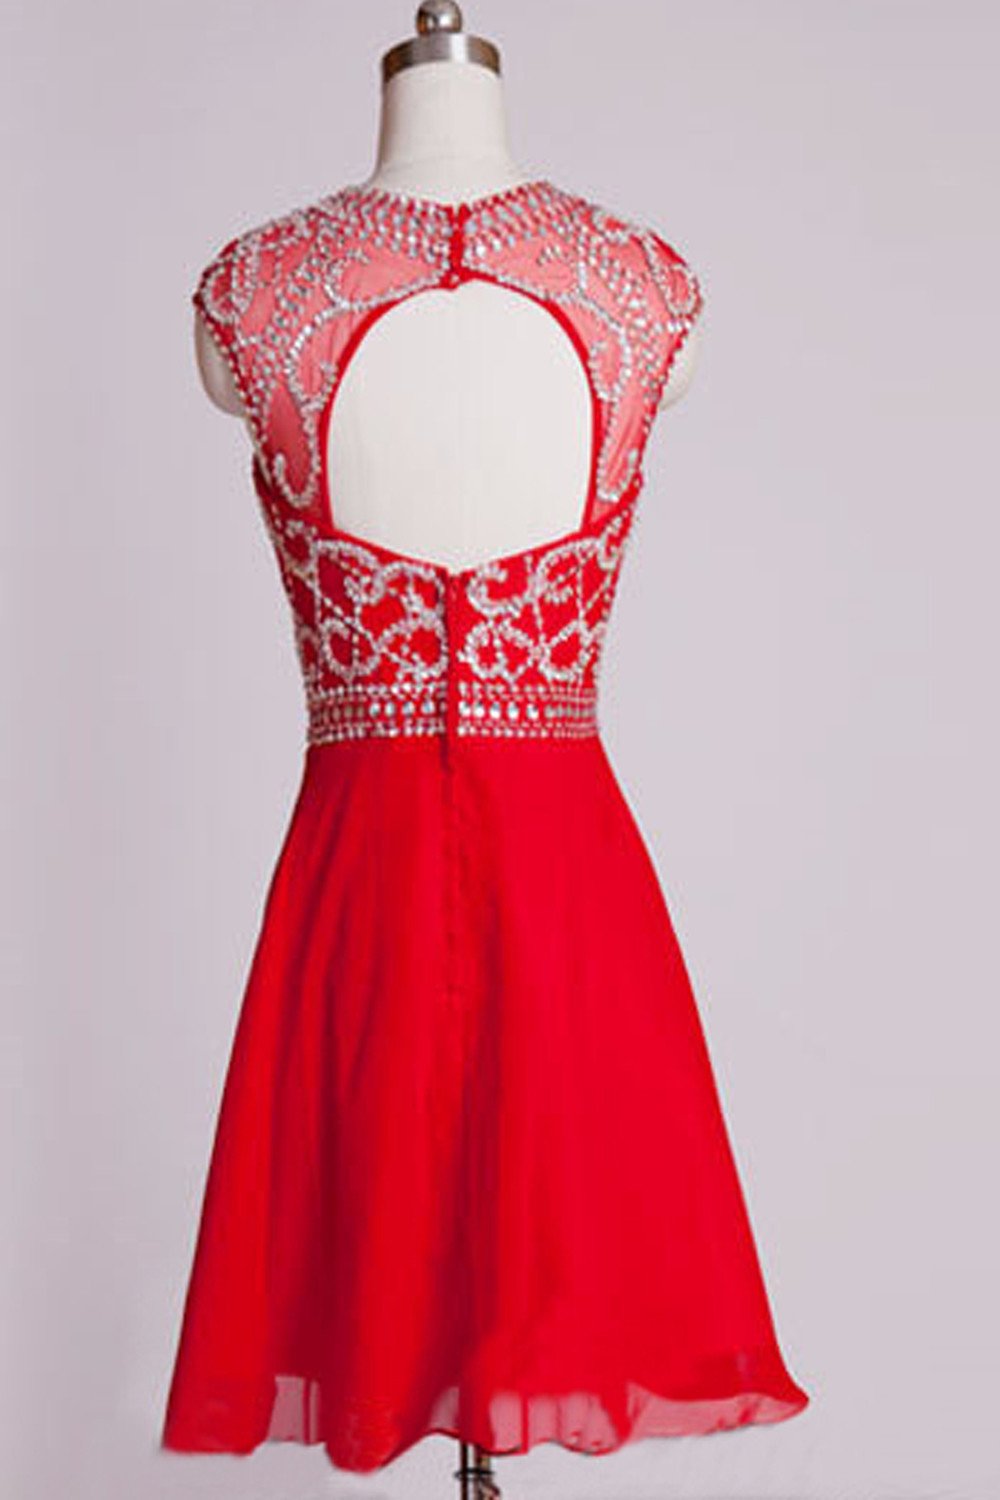 Homecoming Dresses Red Chiffon Cap Sleeves Short Prom Dress ED0658